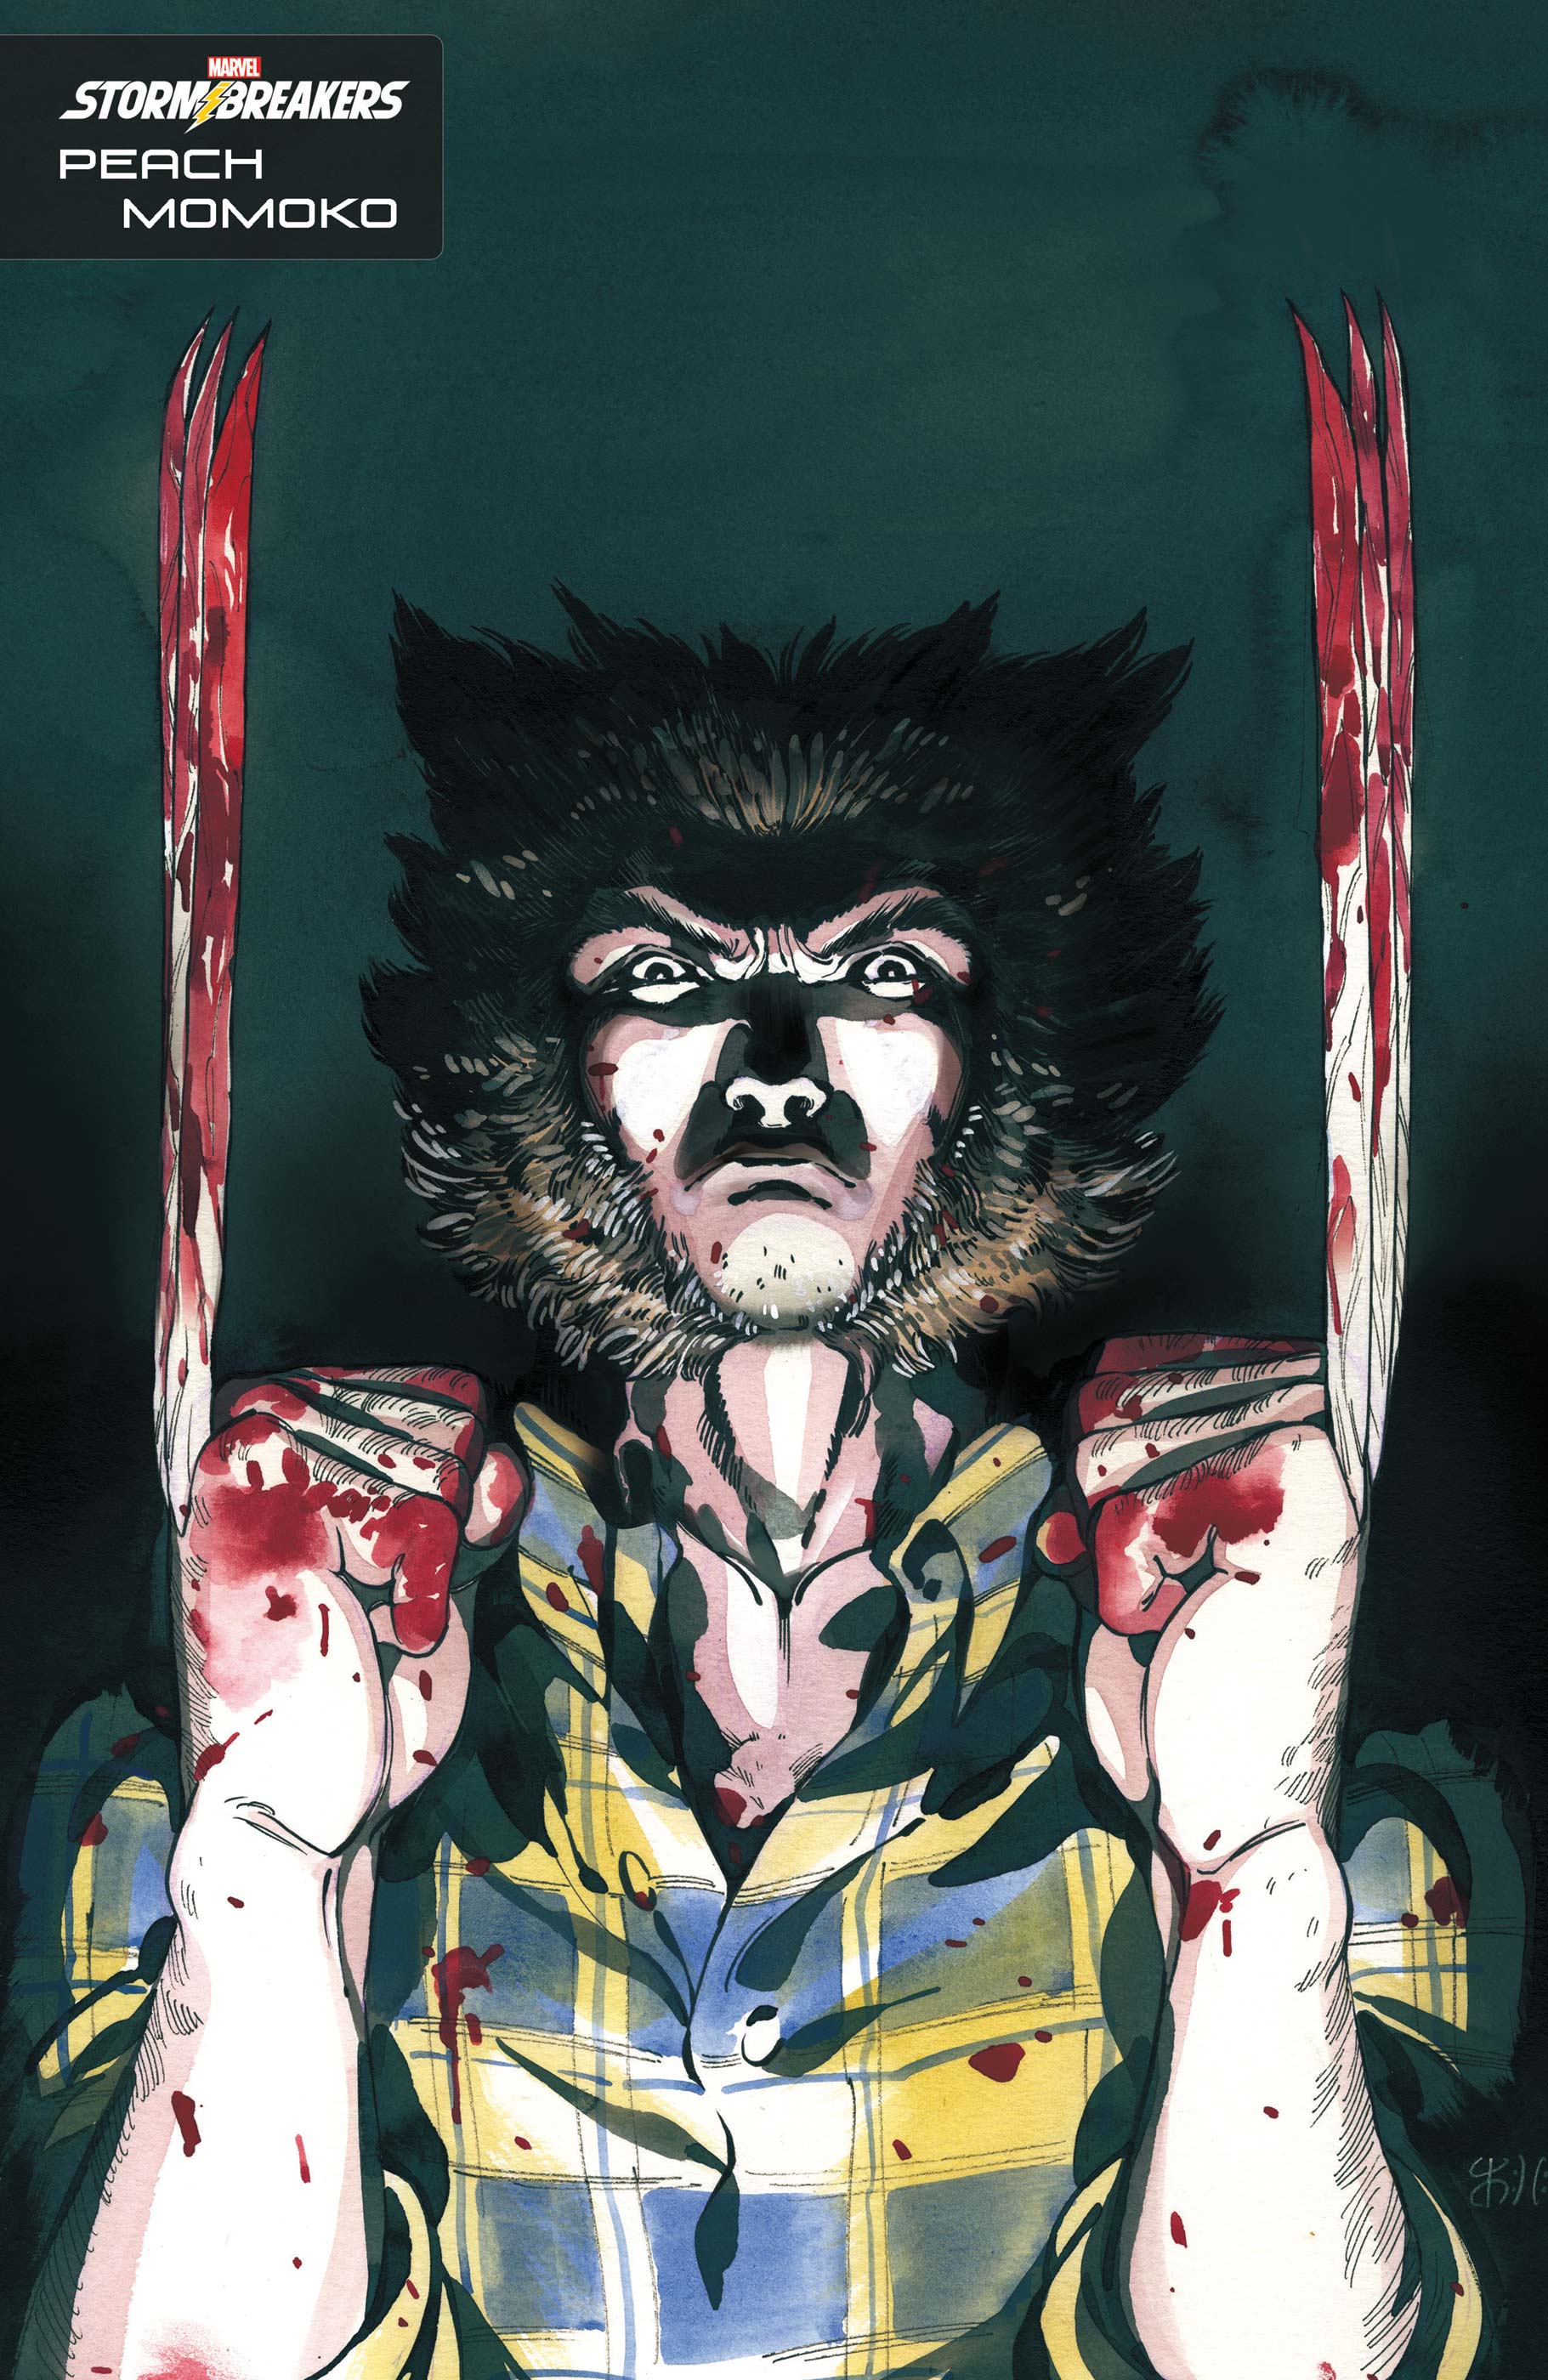 X Deaths of Wolverine (2022) #2 (Variant)